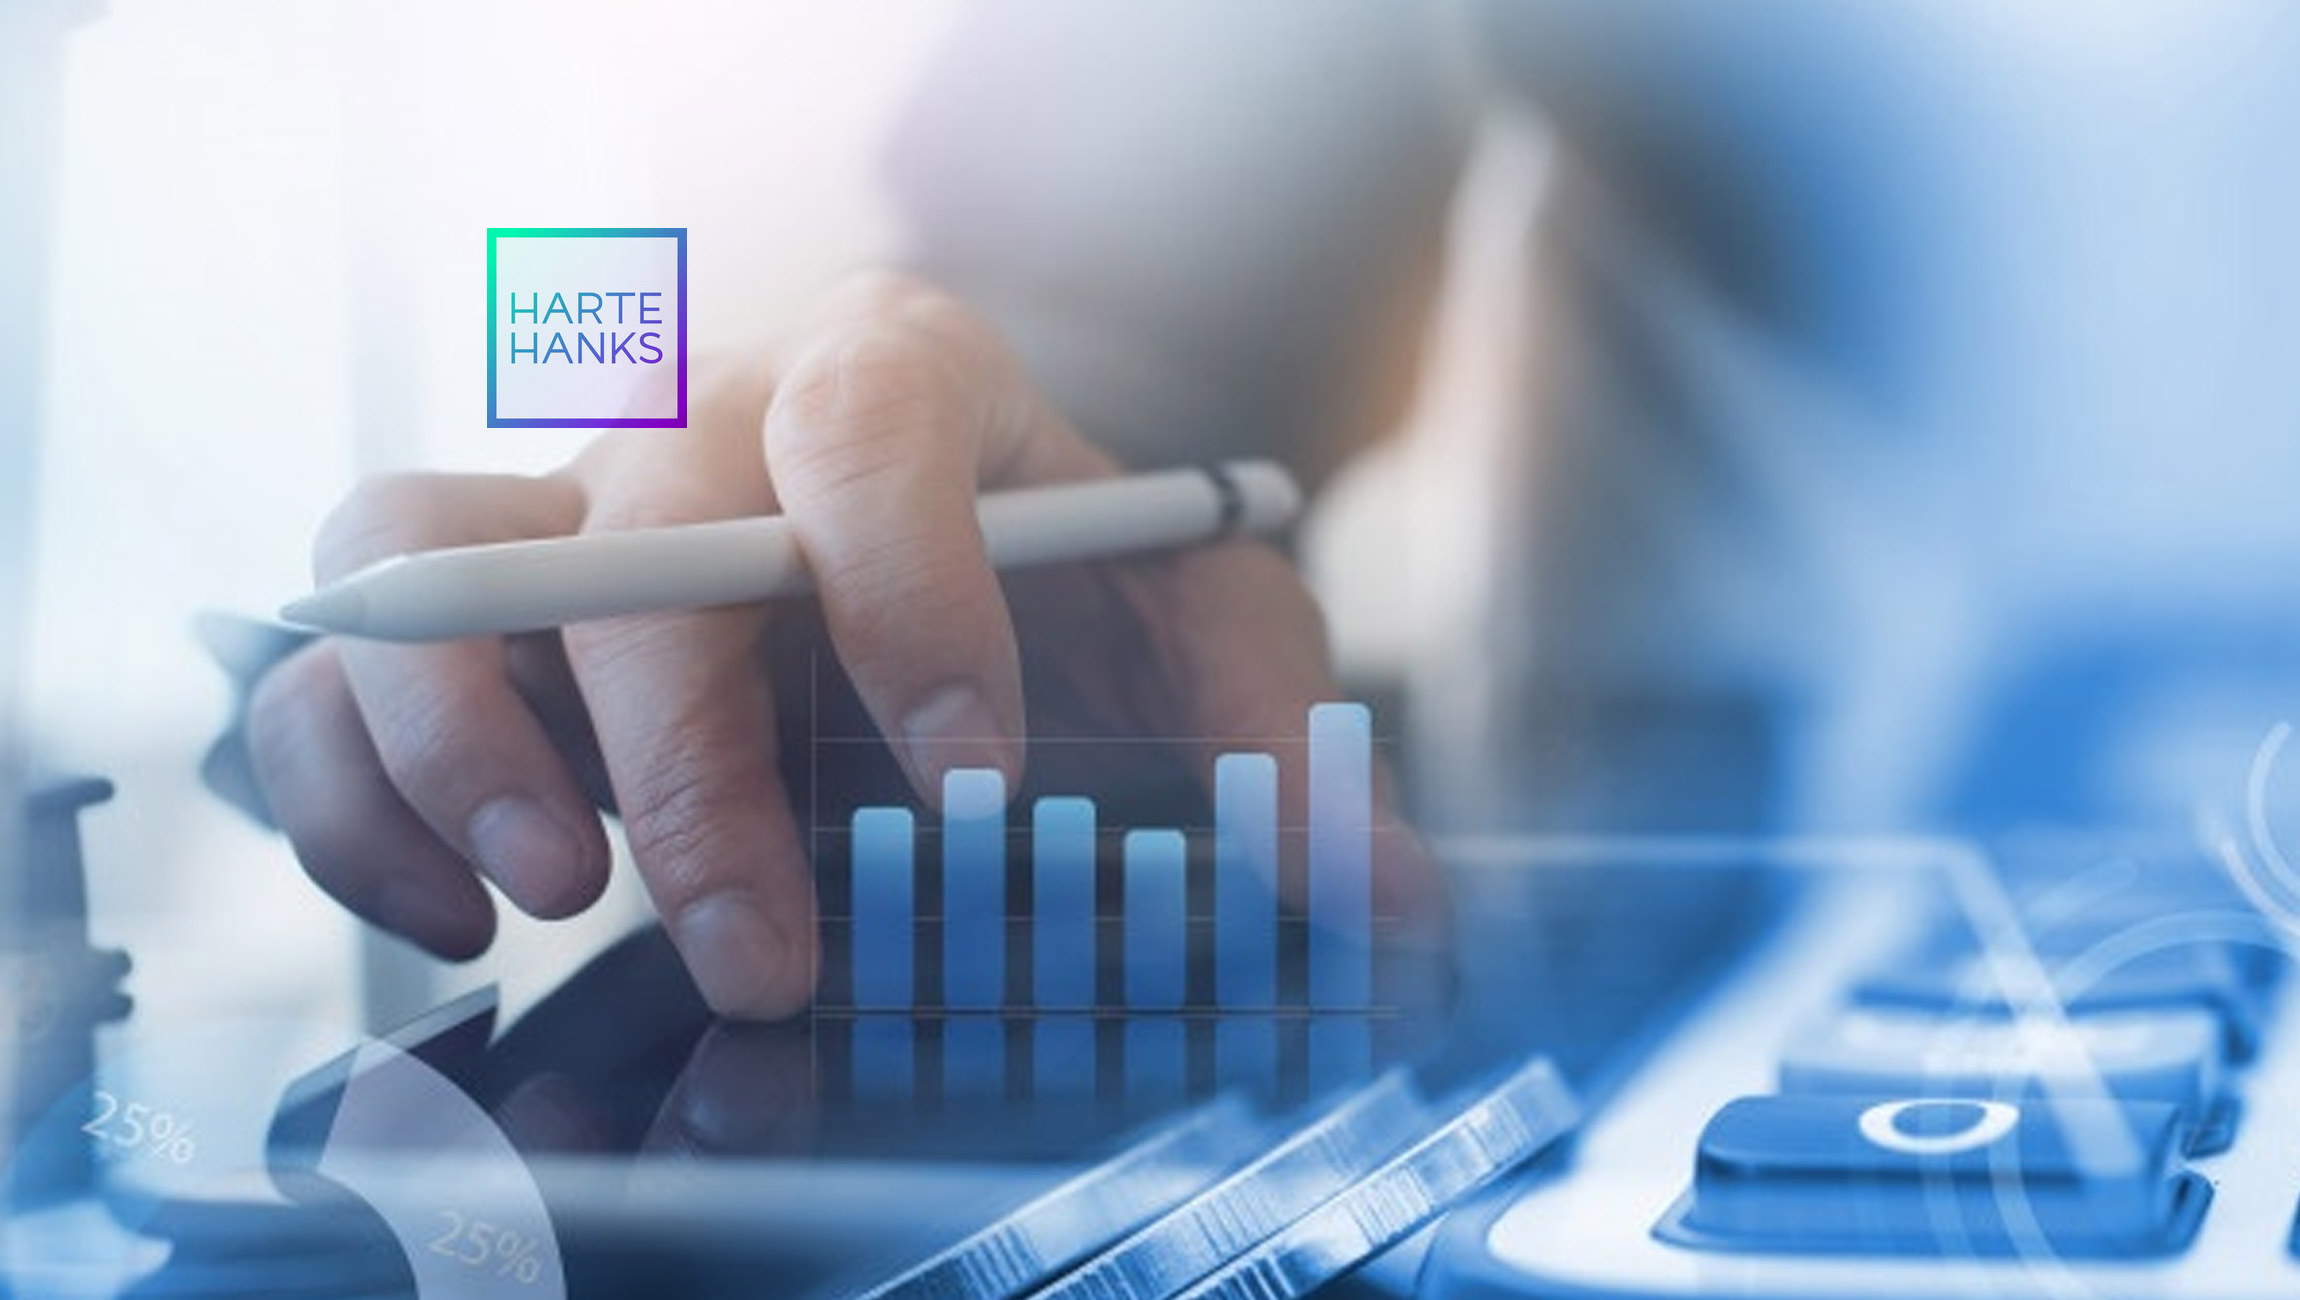 Harte Hanks Tapped By Midea For Exclusive Digital Customer Care Program Across Consumer Brand Portfolio